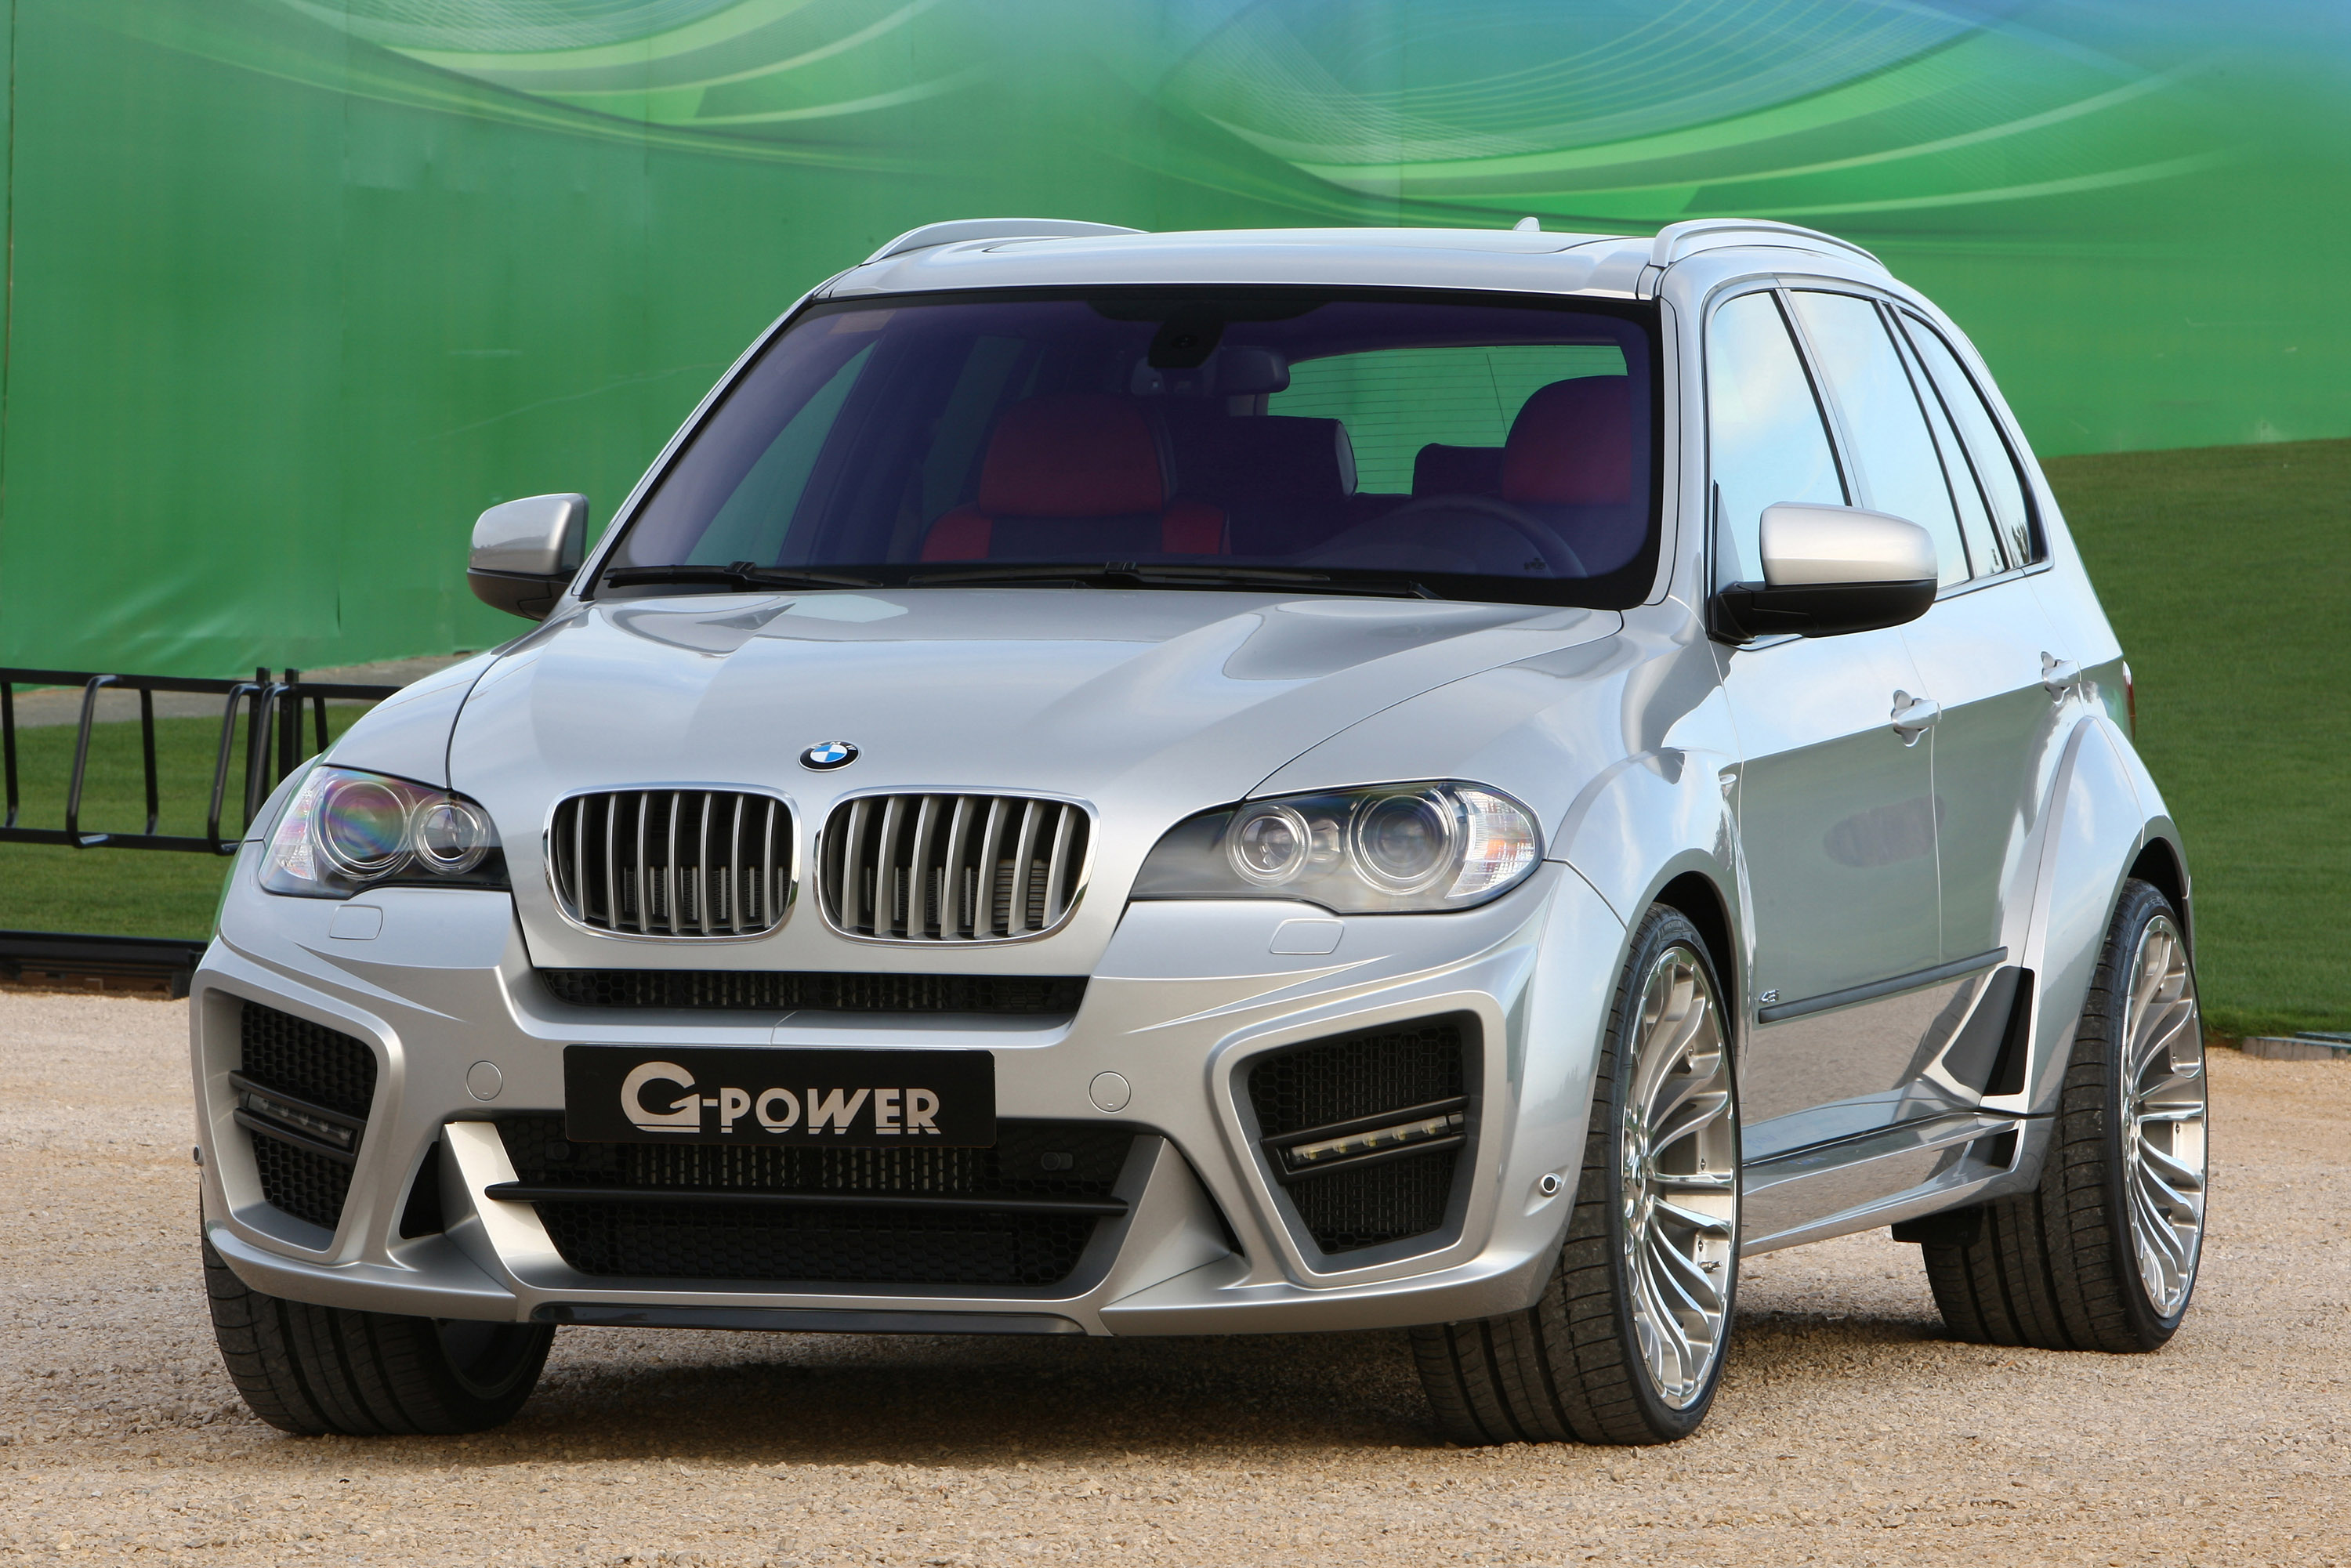 G-POWER TYPHOON BMW X5